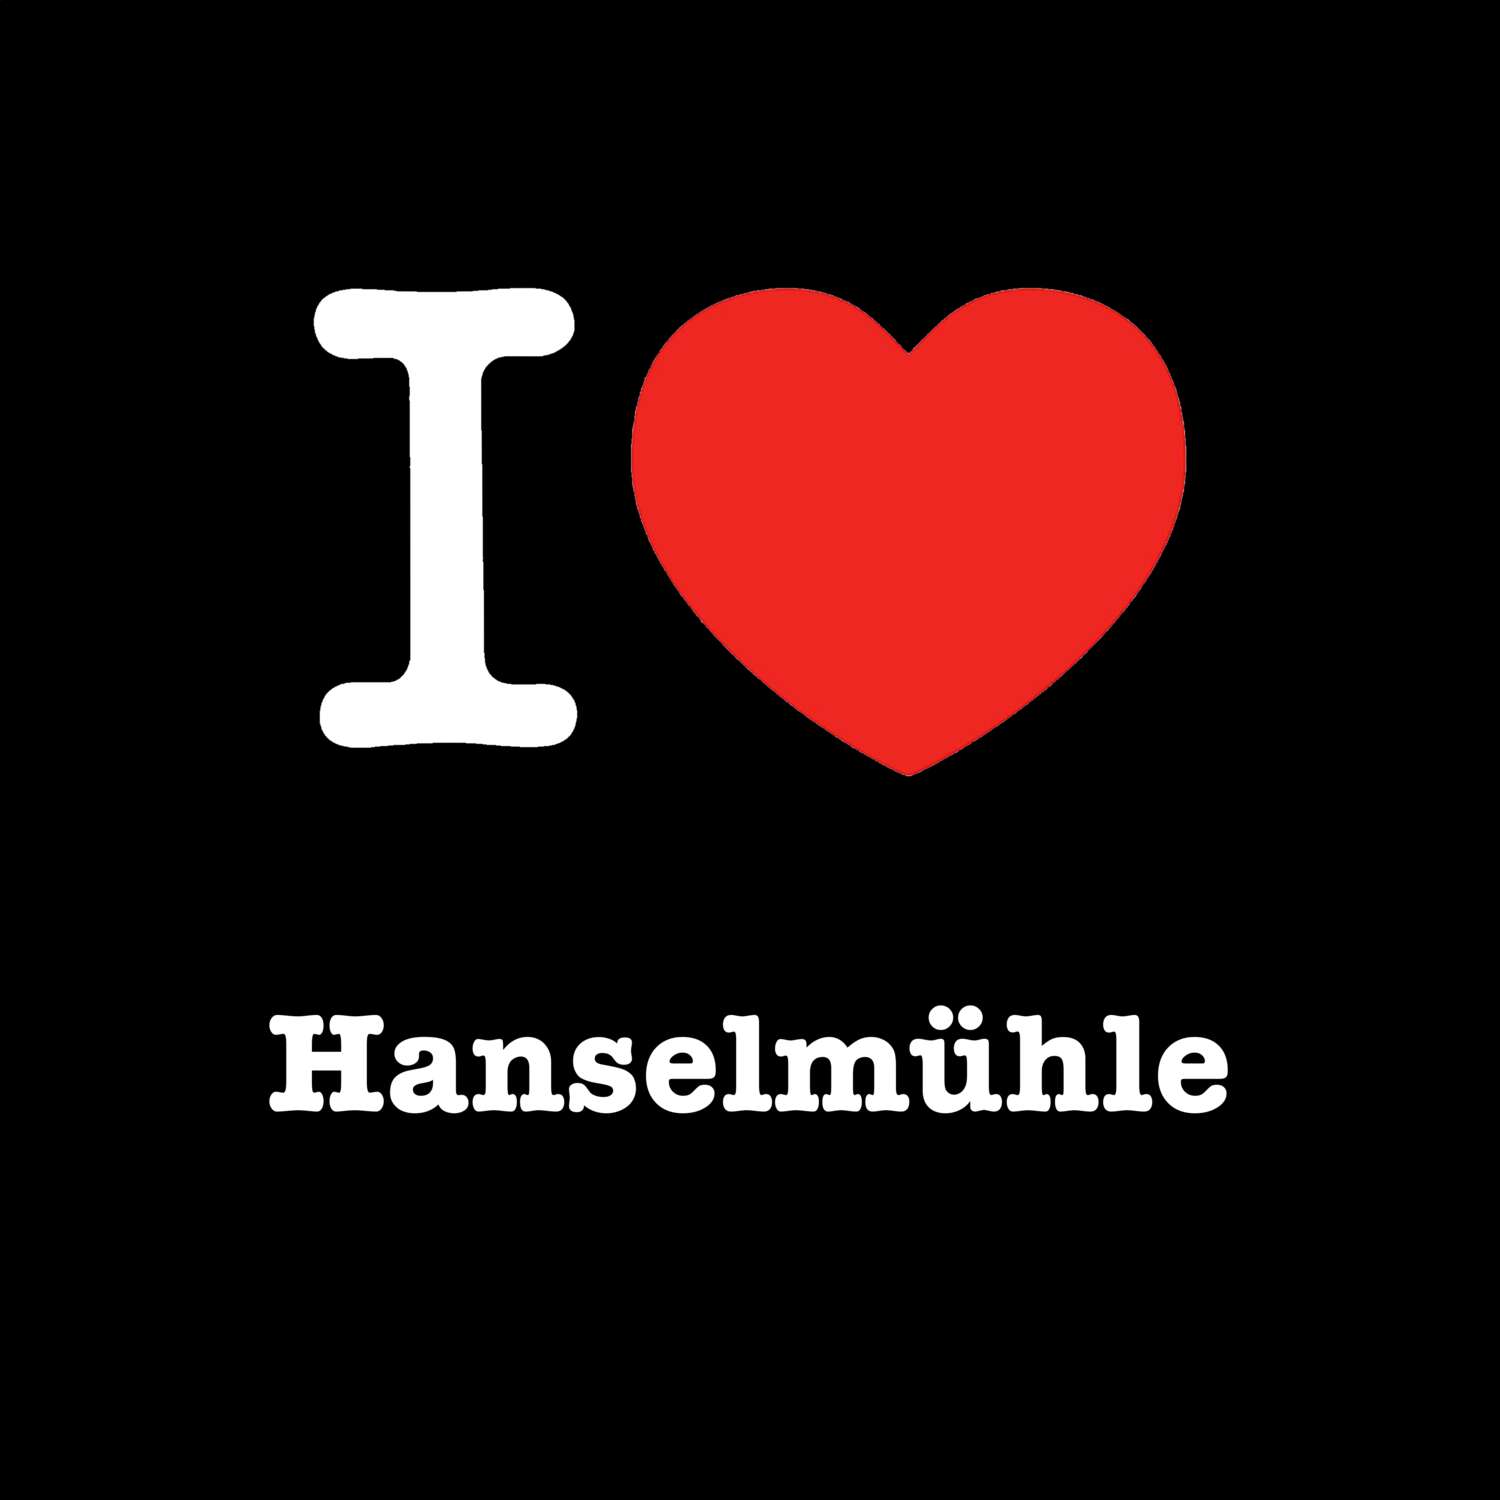 Hanselmühle T-Shirt »I love«